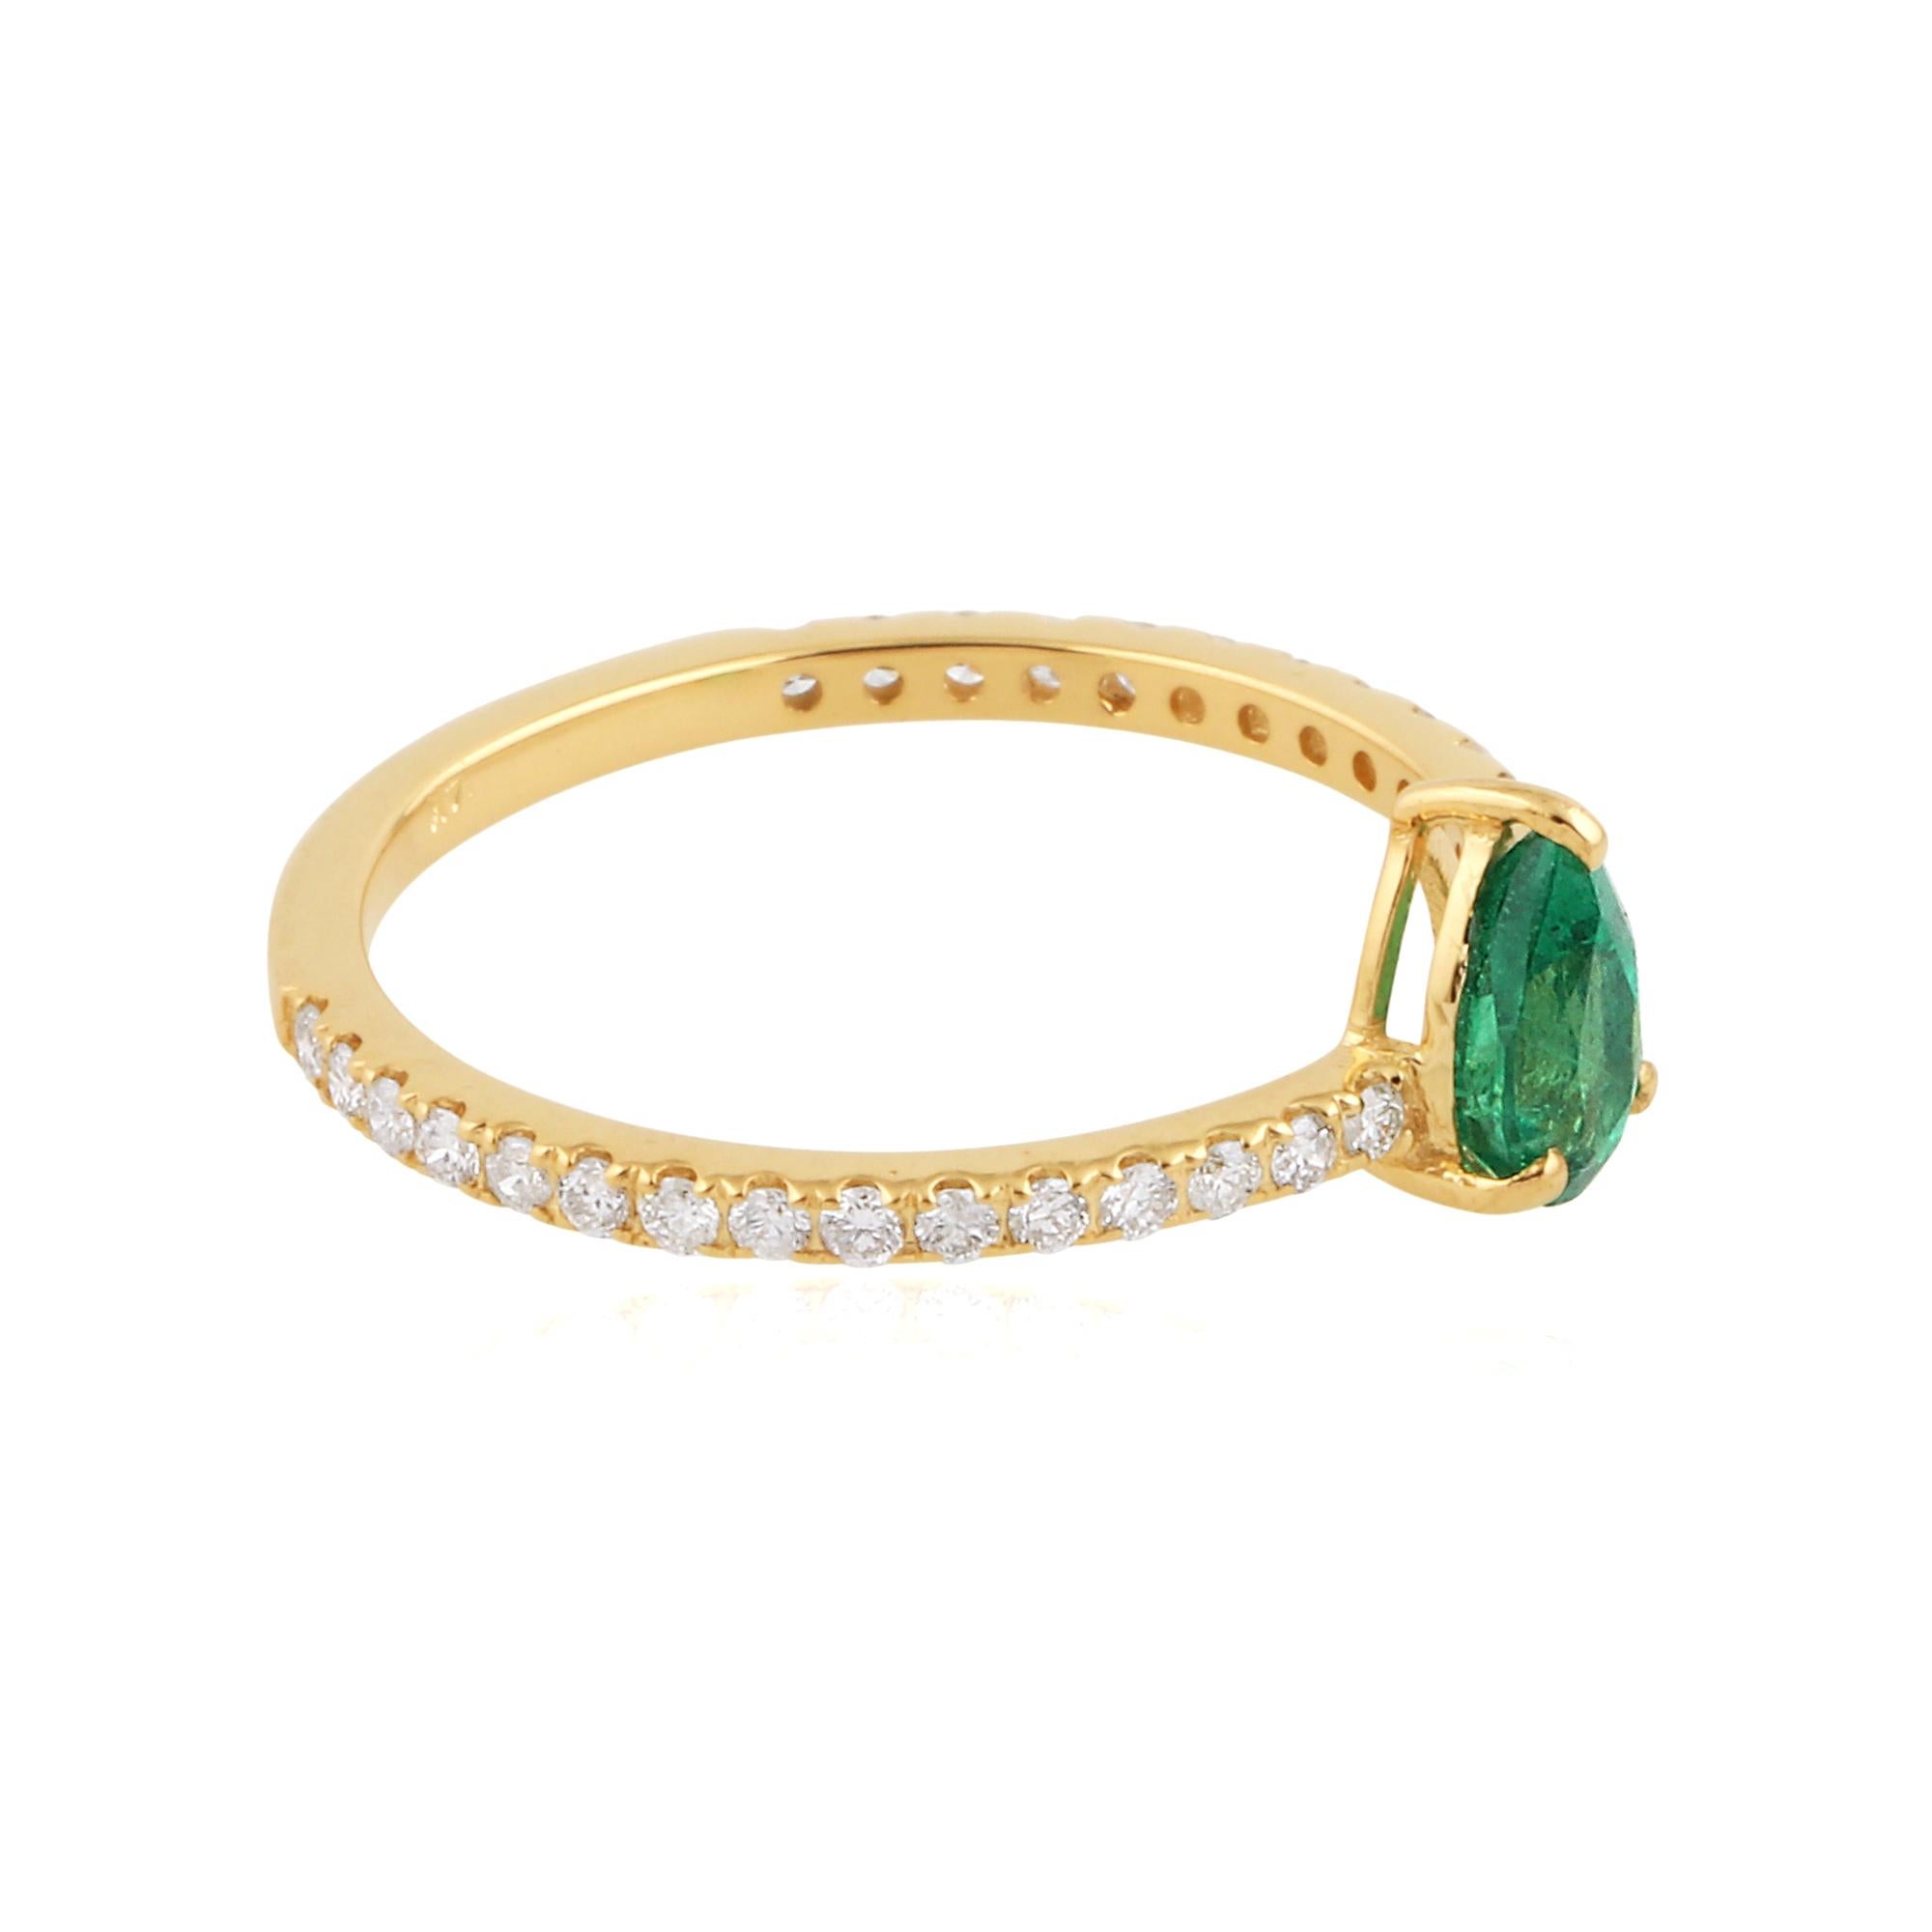 For Sale:  Pear Zambian Emerald Gemstone Band Ring Diamond 14 Karat Yellow Gold Jewelry 2